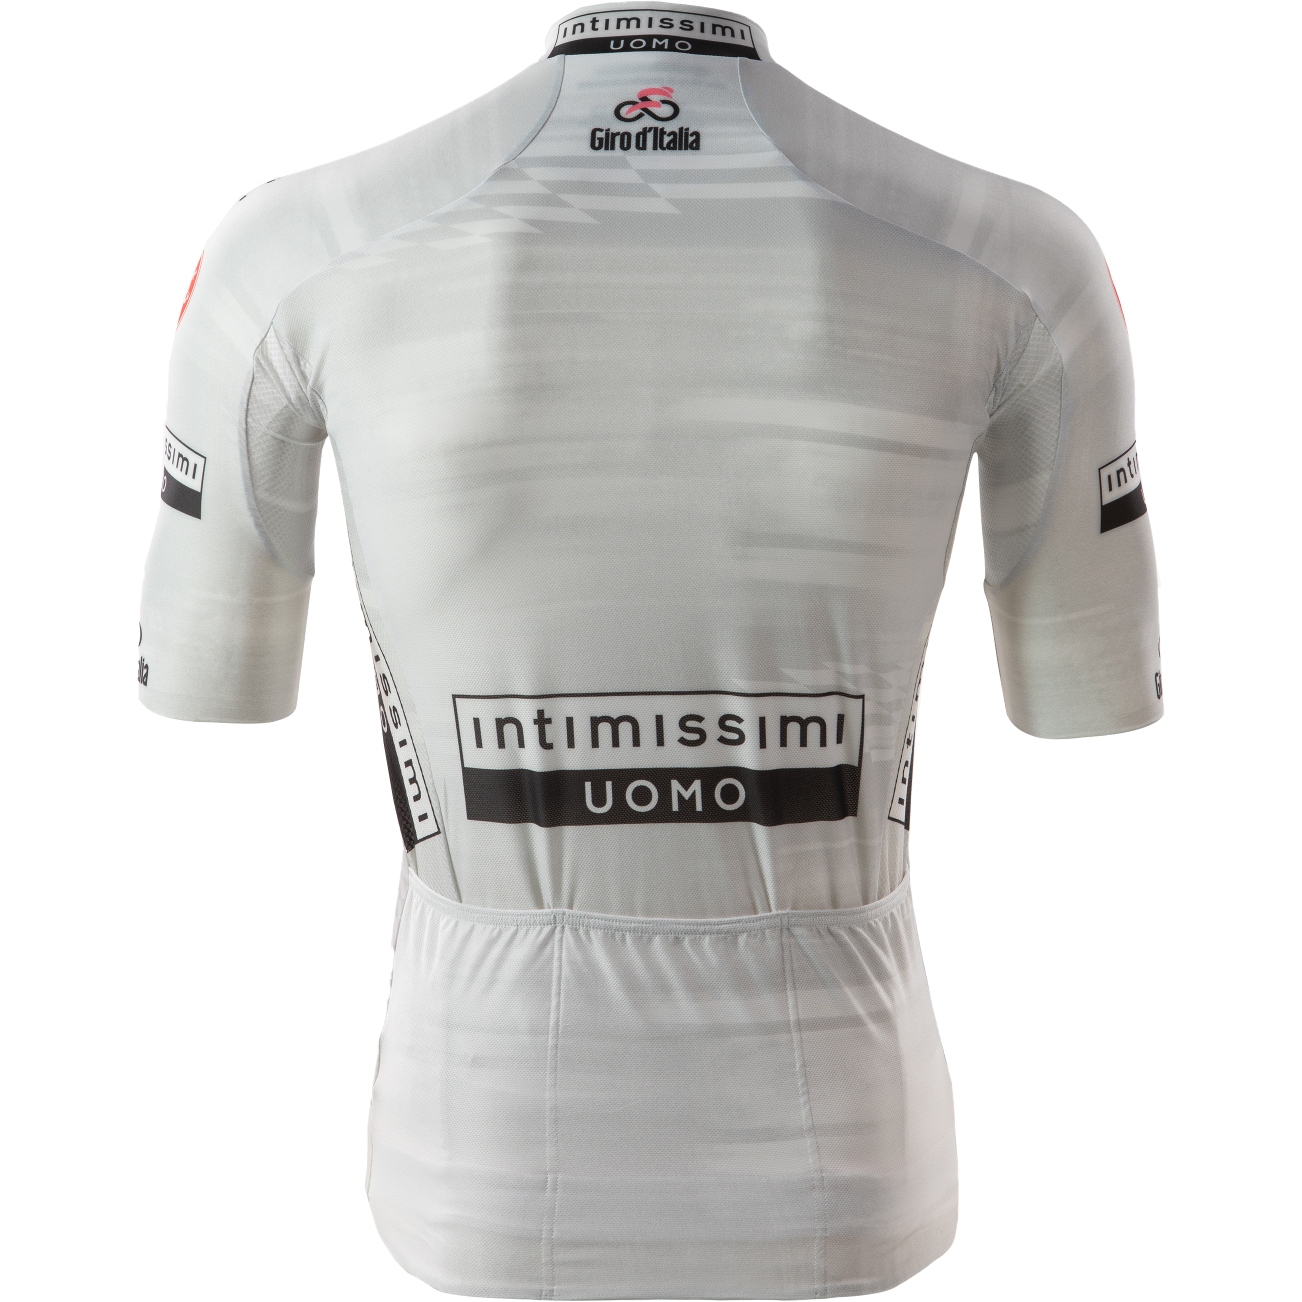 Castelli Giro d'Italia #Giro106 Race Jersey Men - white 001